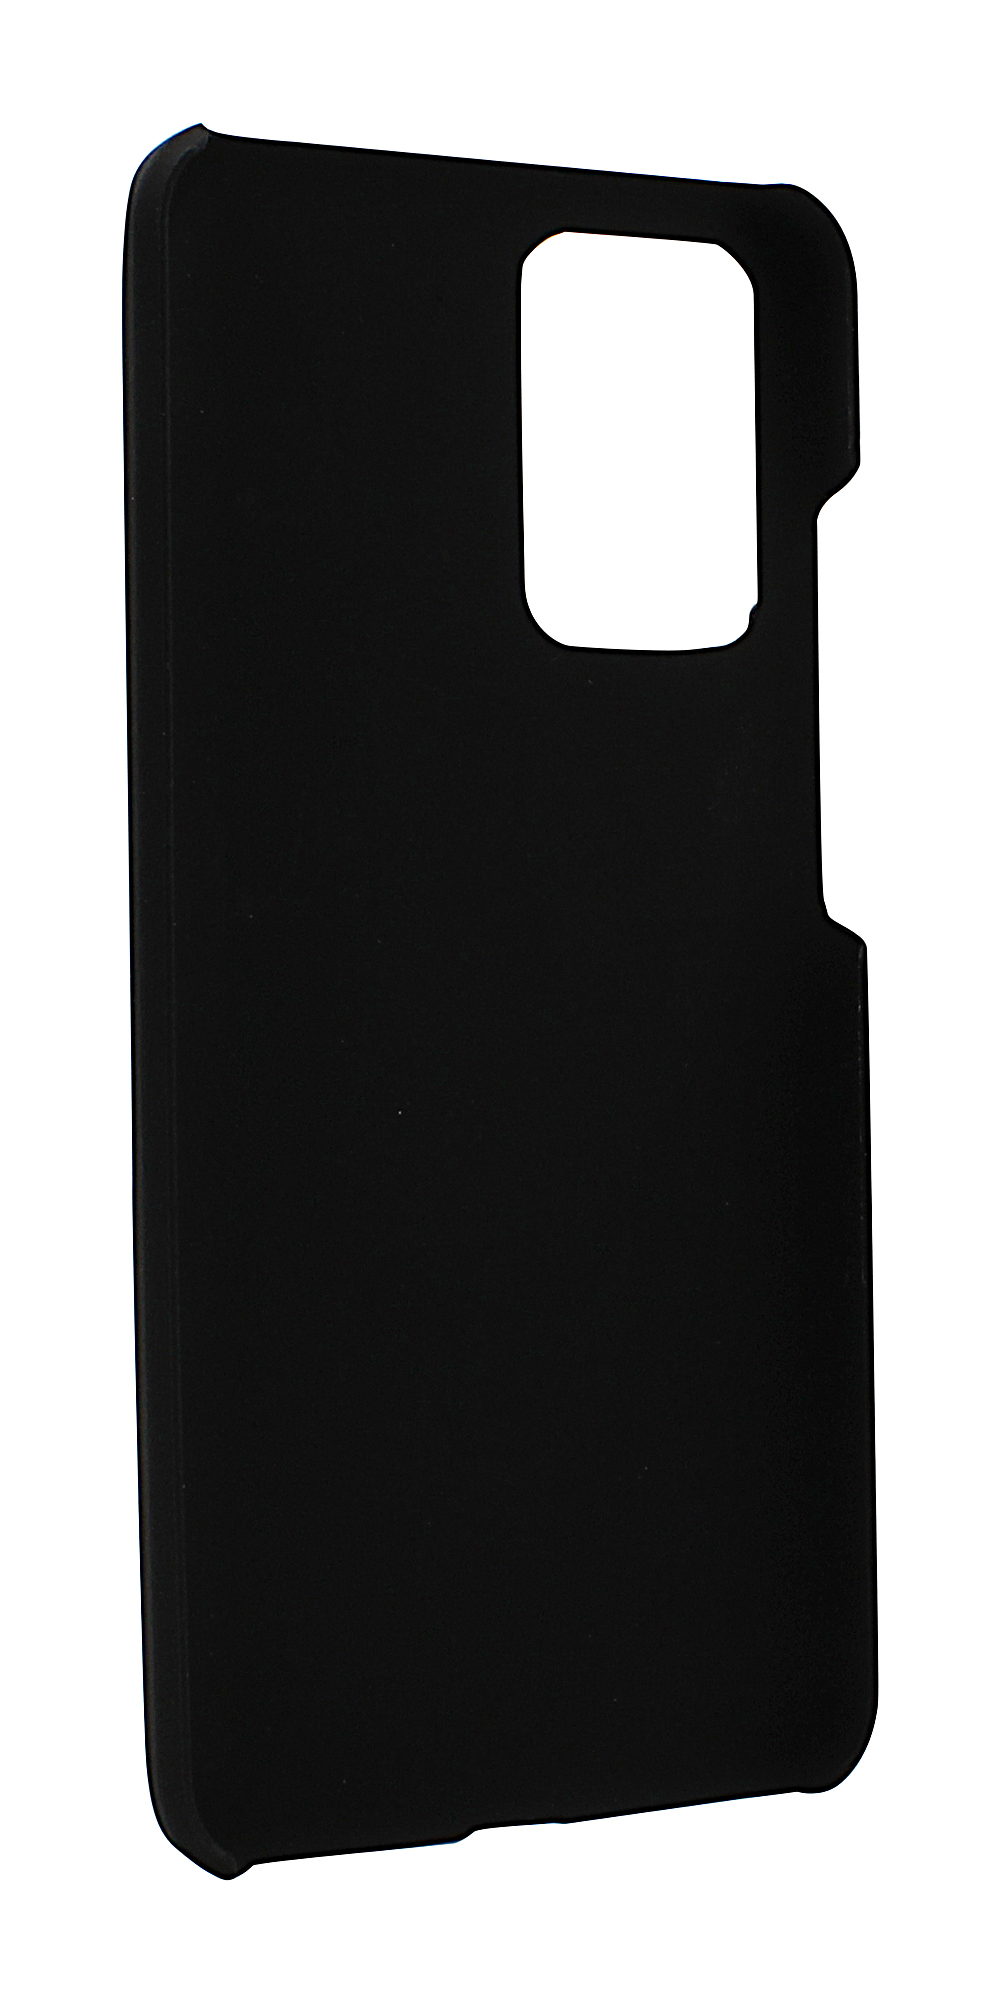 Skimblocker Magnet Wallet Xiaomi Redmi 10 NFC